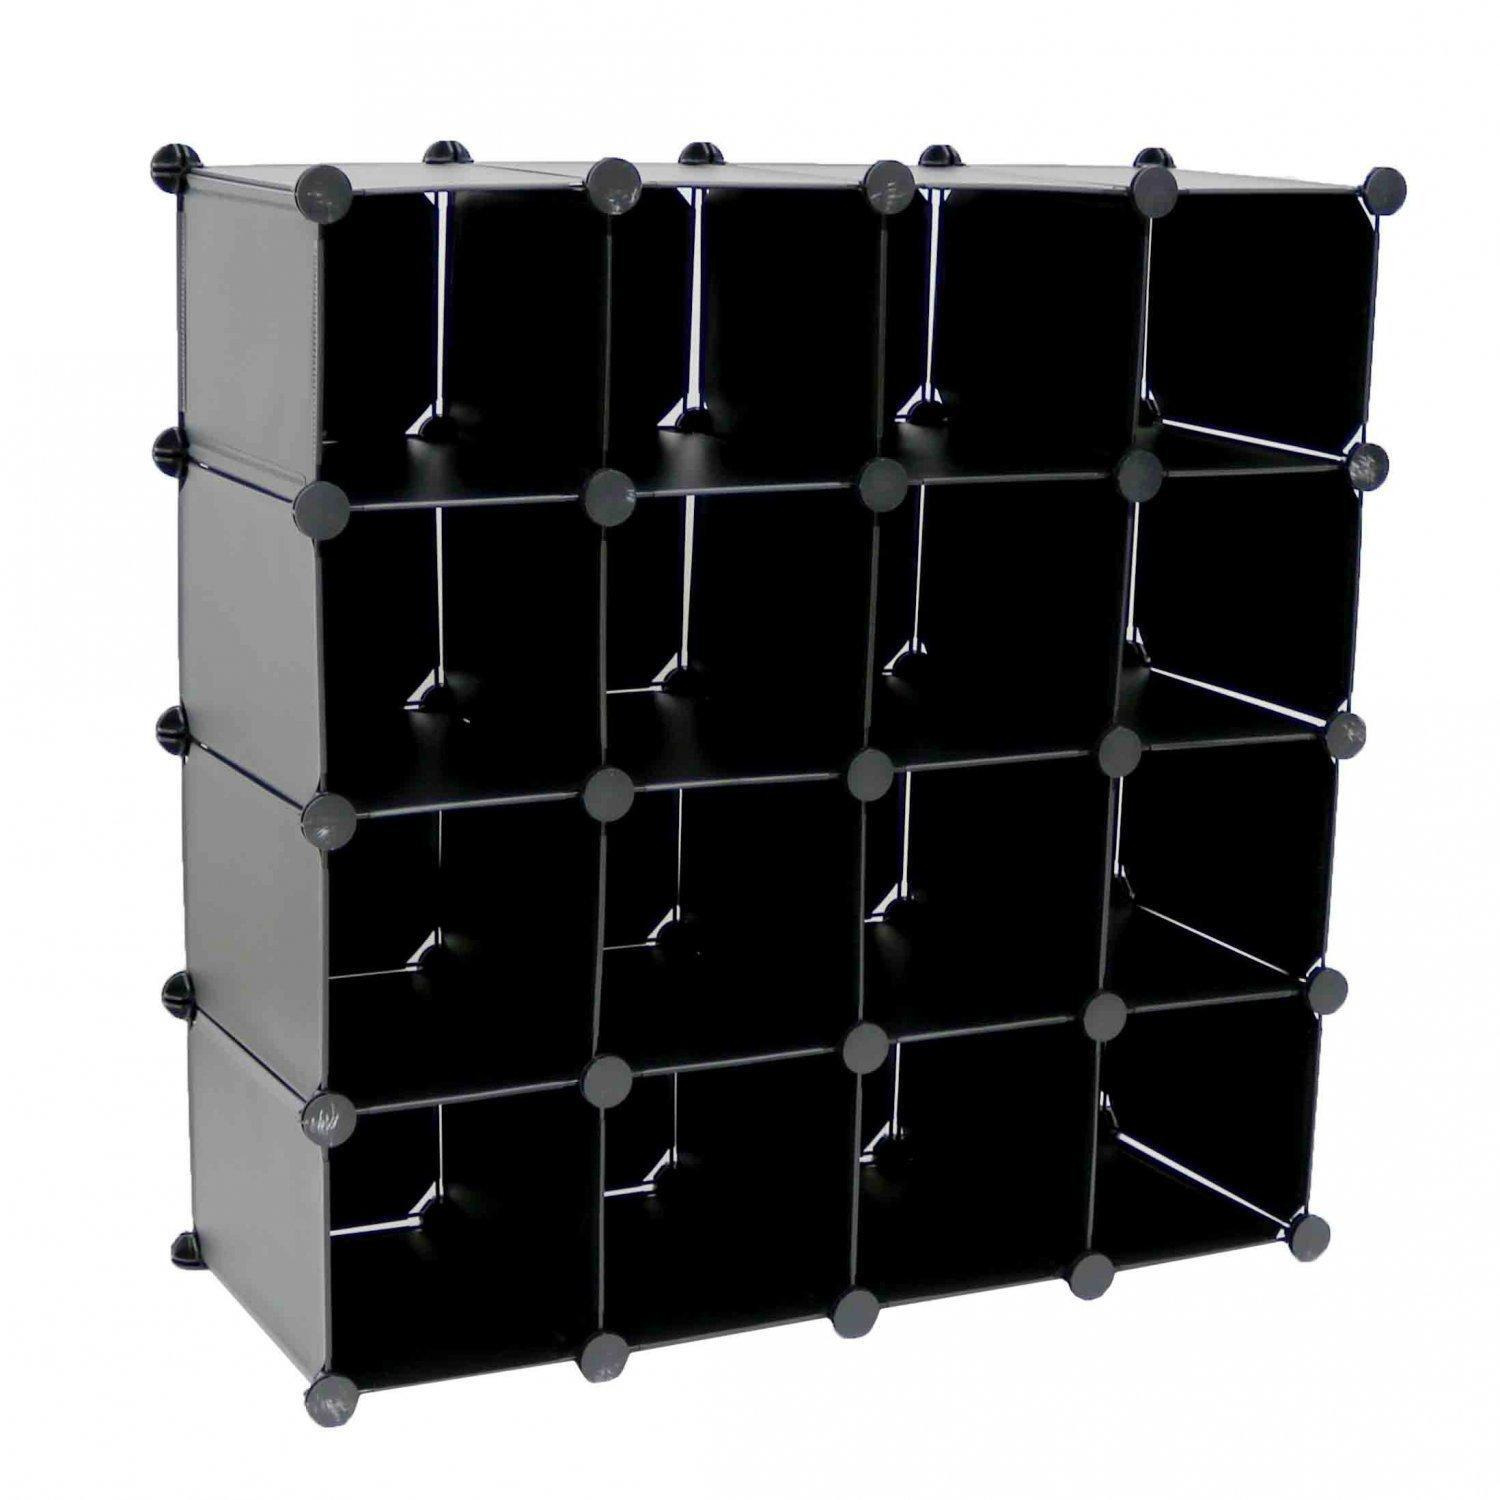 Interlocking 16 Compartment Shoe Organiser Cube - image 1